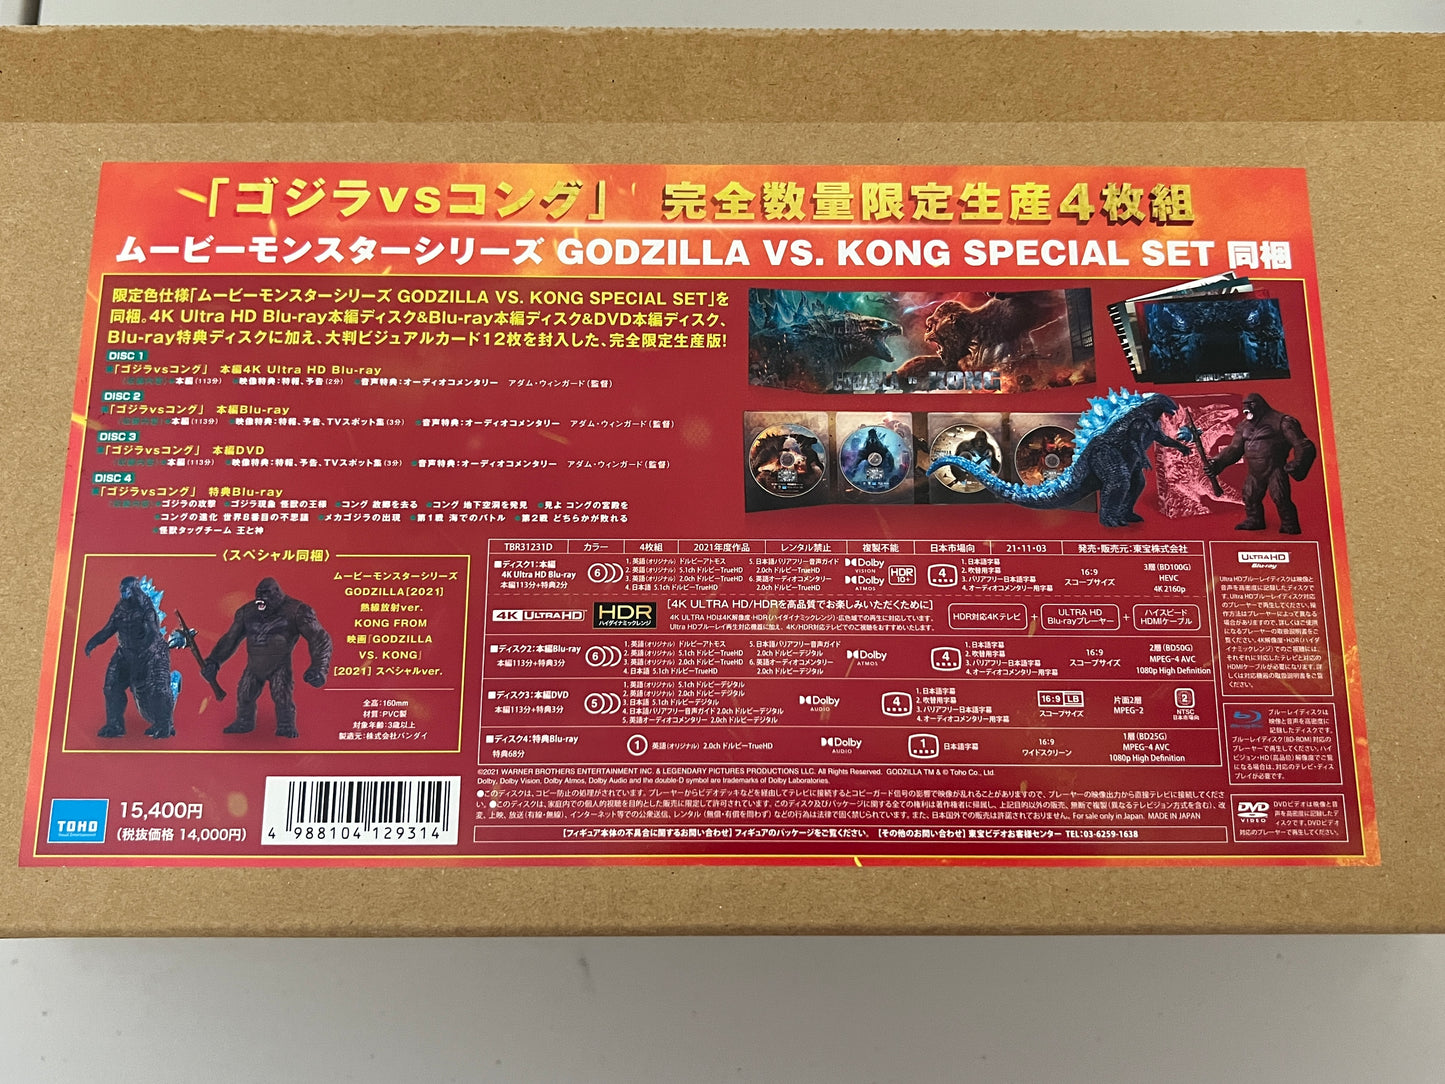 Godzilla vs. Kong Japan Exclusive SPECIAL SET 4k UHD Blu-ray - Figures - Cards